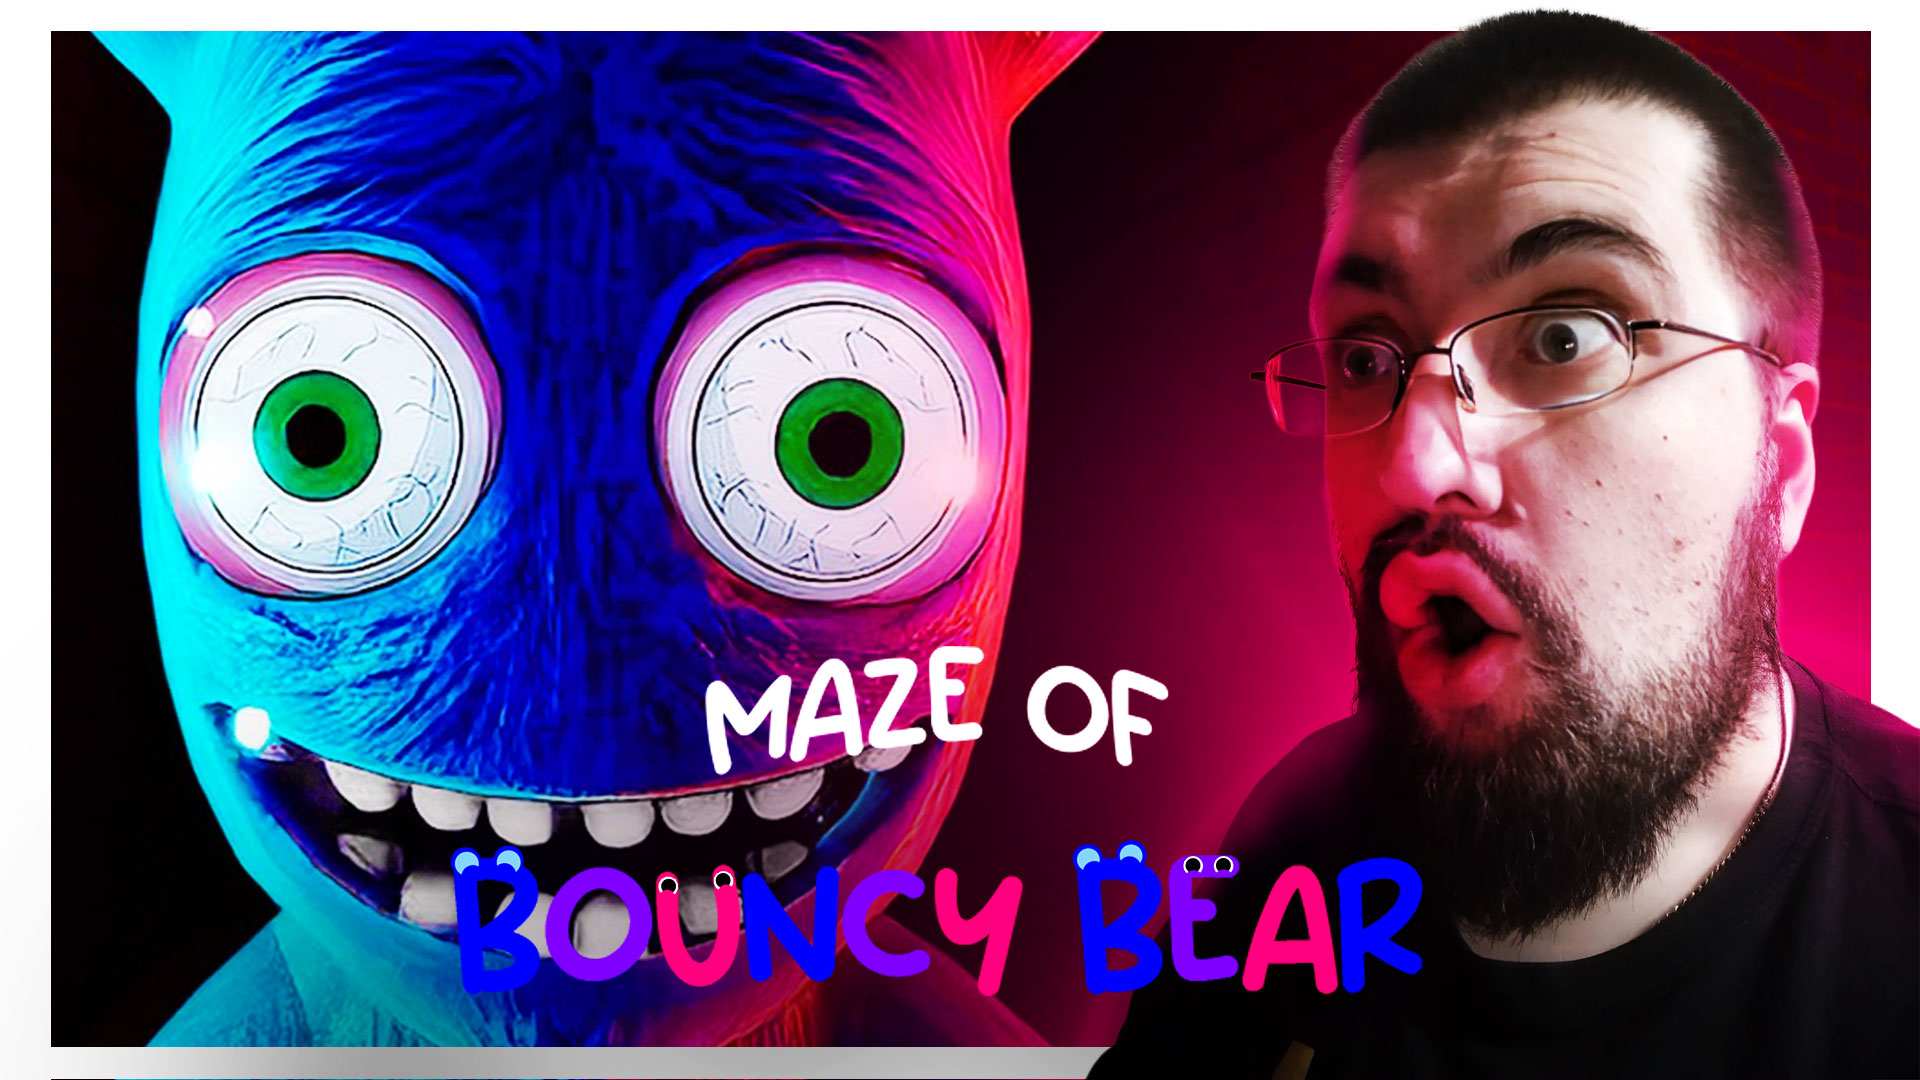 ДВА ХОРОРЦА В ОДНОМ _ My Strange Attic, Maze of Bouncy Bear